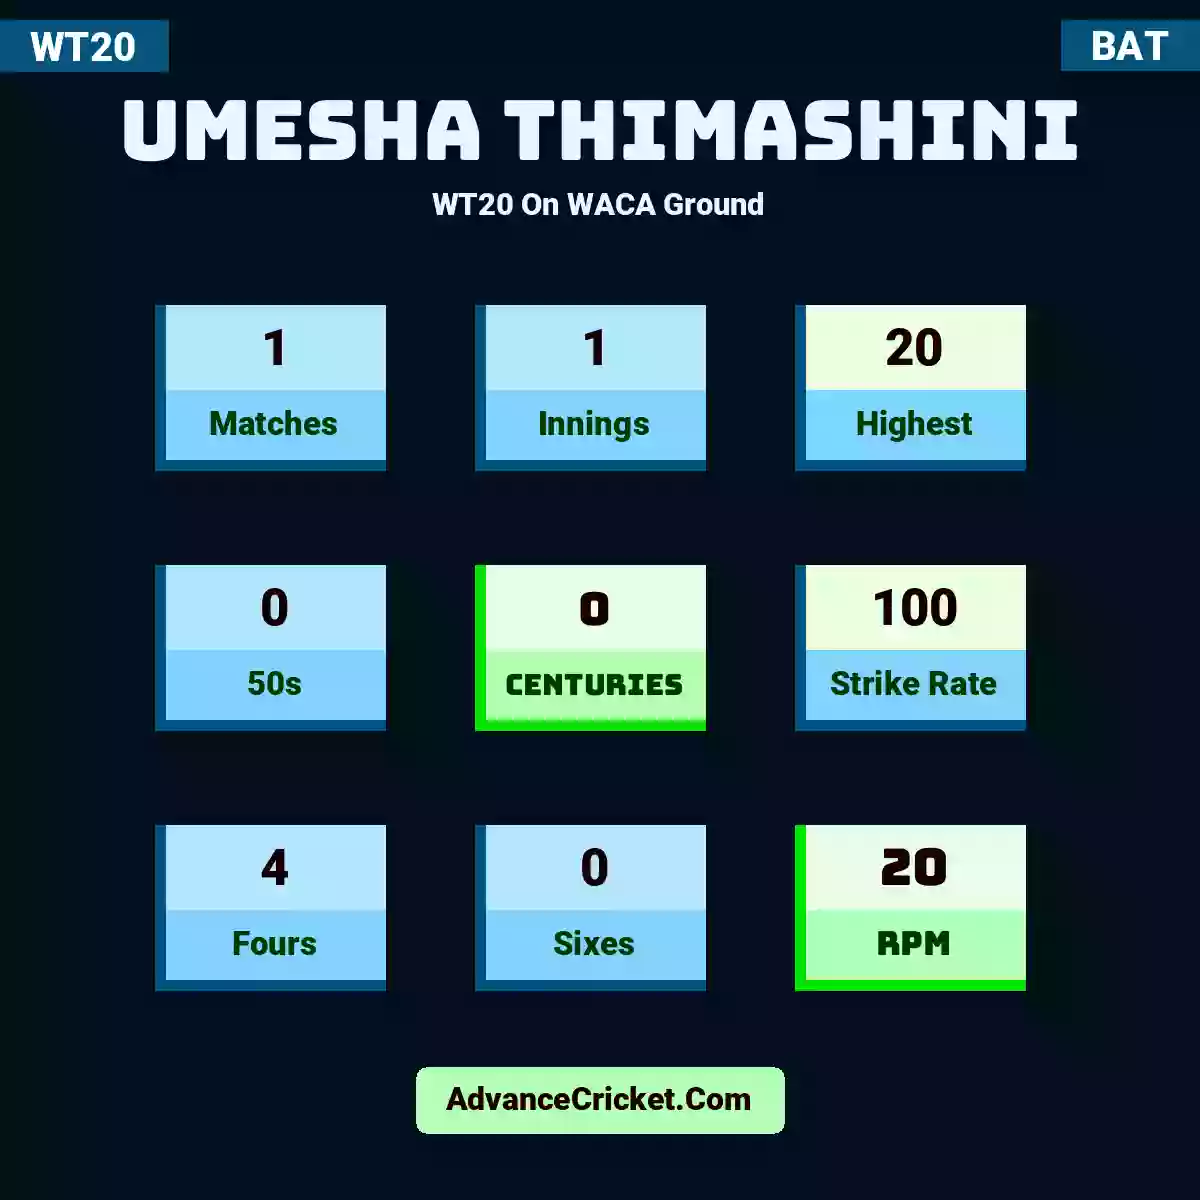 Umesha Thimashini WT20  On WACA Ground, Umesha Thimashini played 1 matches, scored 20 runs as highest, 0 half-centuries, and 0 centuries, with a strike rate of 100. U.Thimashini hit 4 fours and 0 sixes, with an RPM of 20.